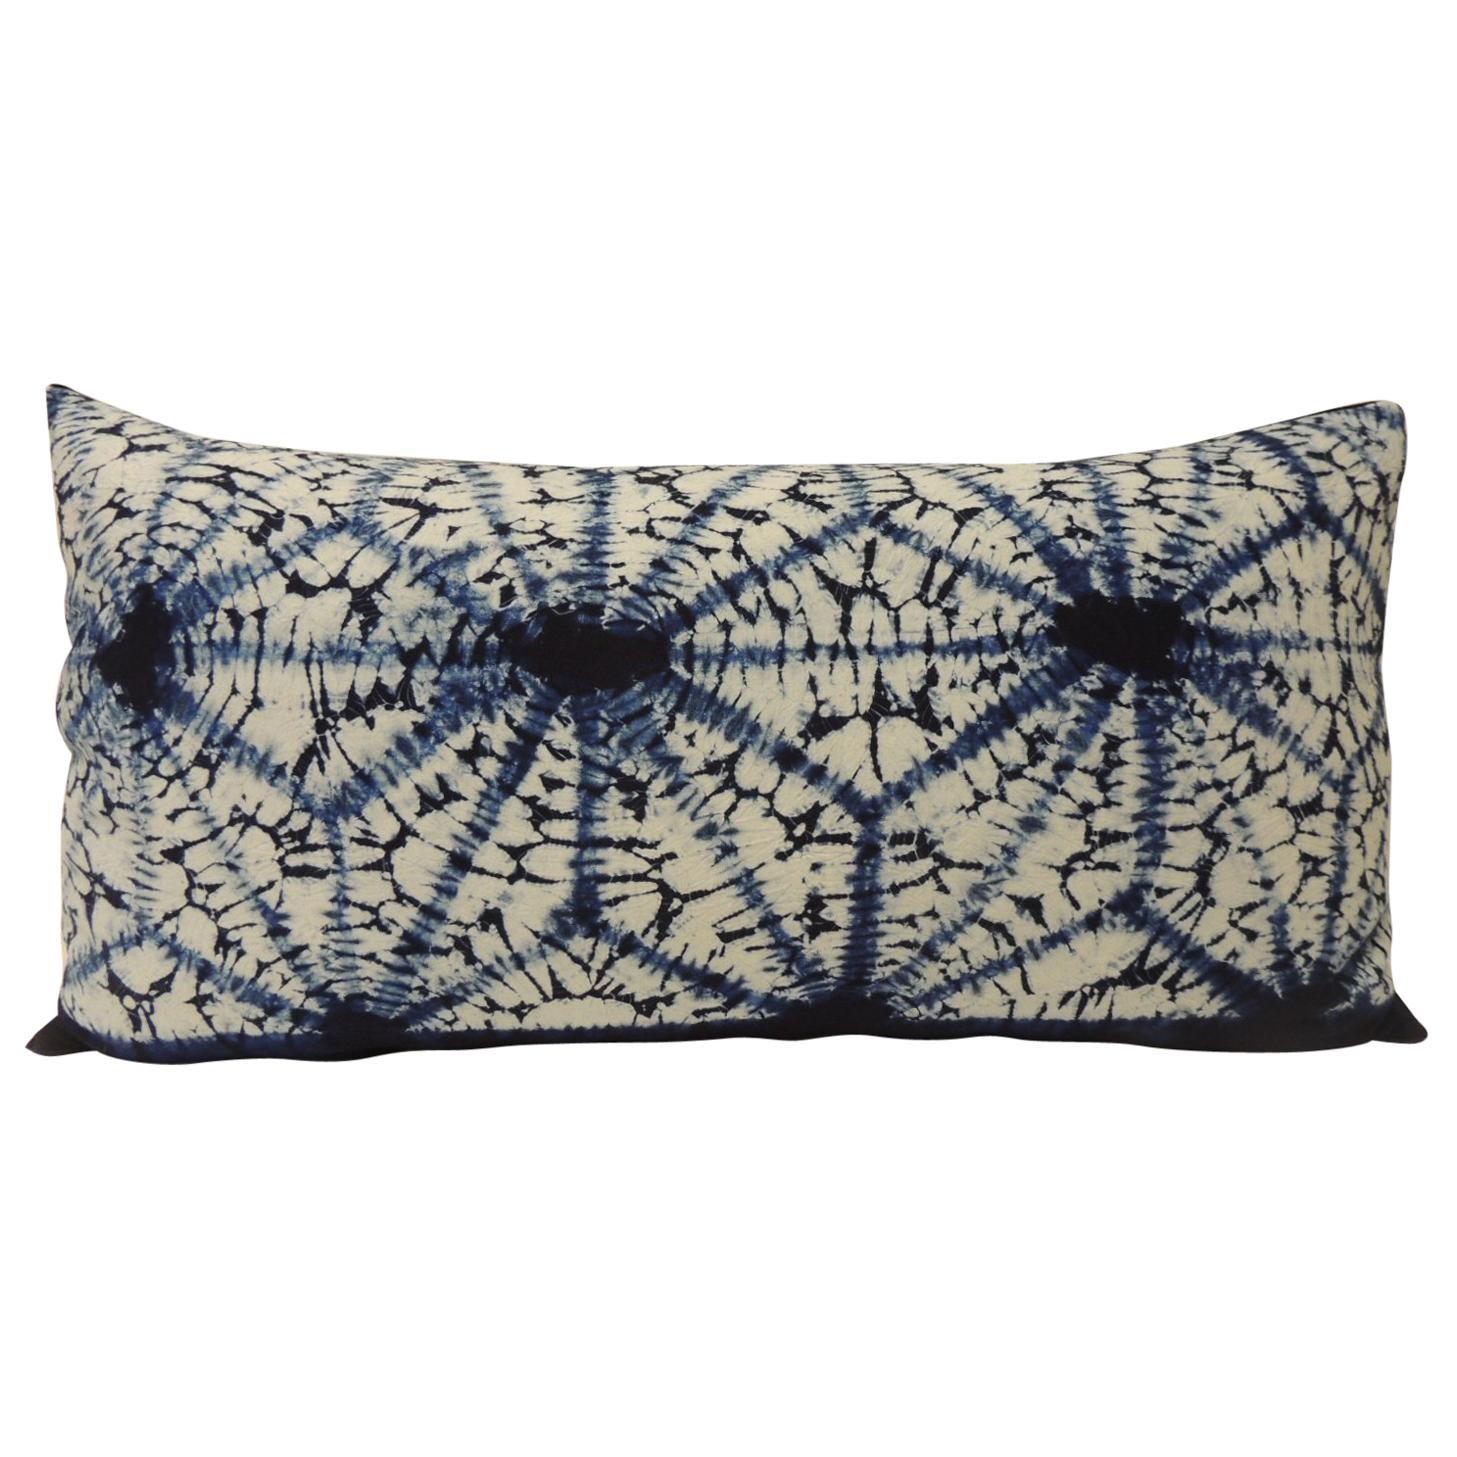 Vintage Indigo and White African Resist-dye Textile Decorative Pillow